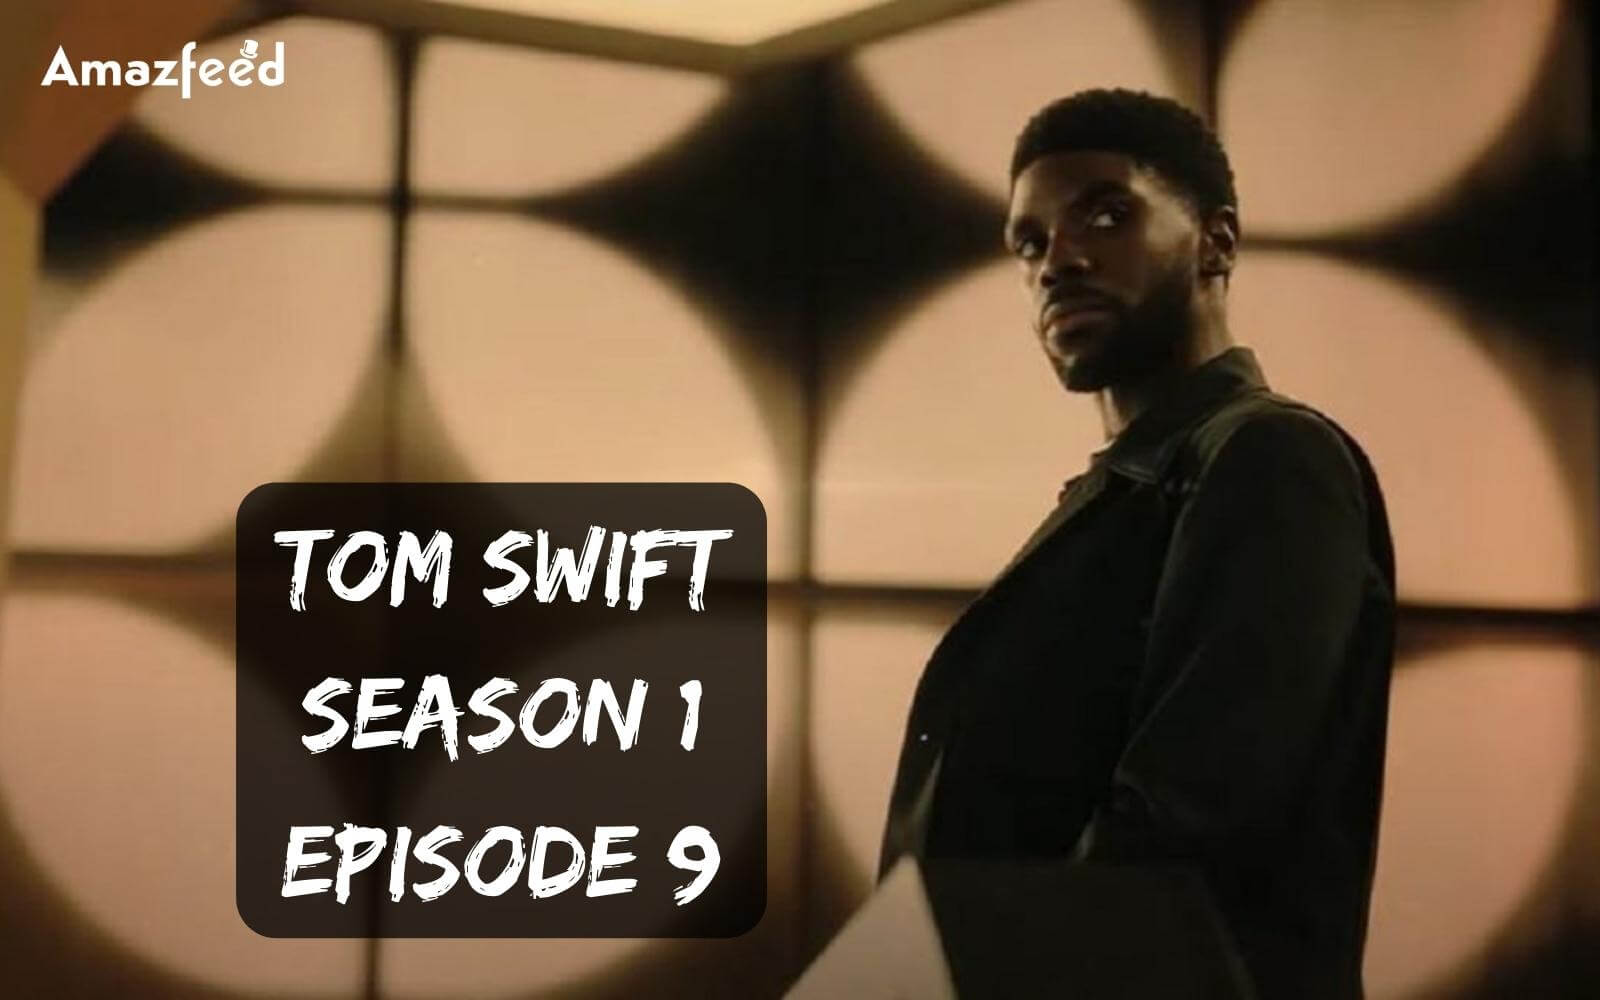 Tom Swift Season 1 Episode 9 ⇒ Countdown, Release Date, Spoilers, Recap, & Trailer